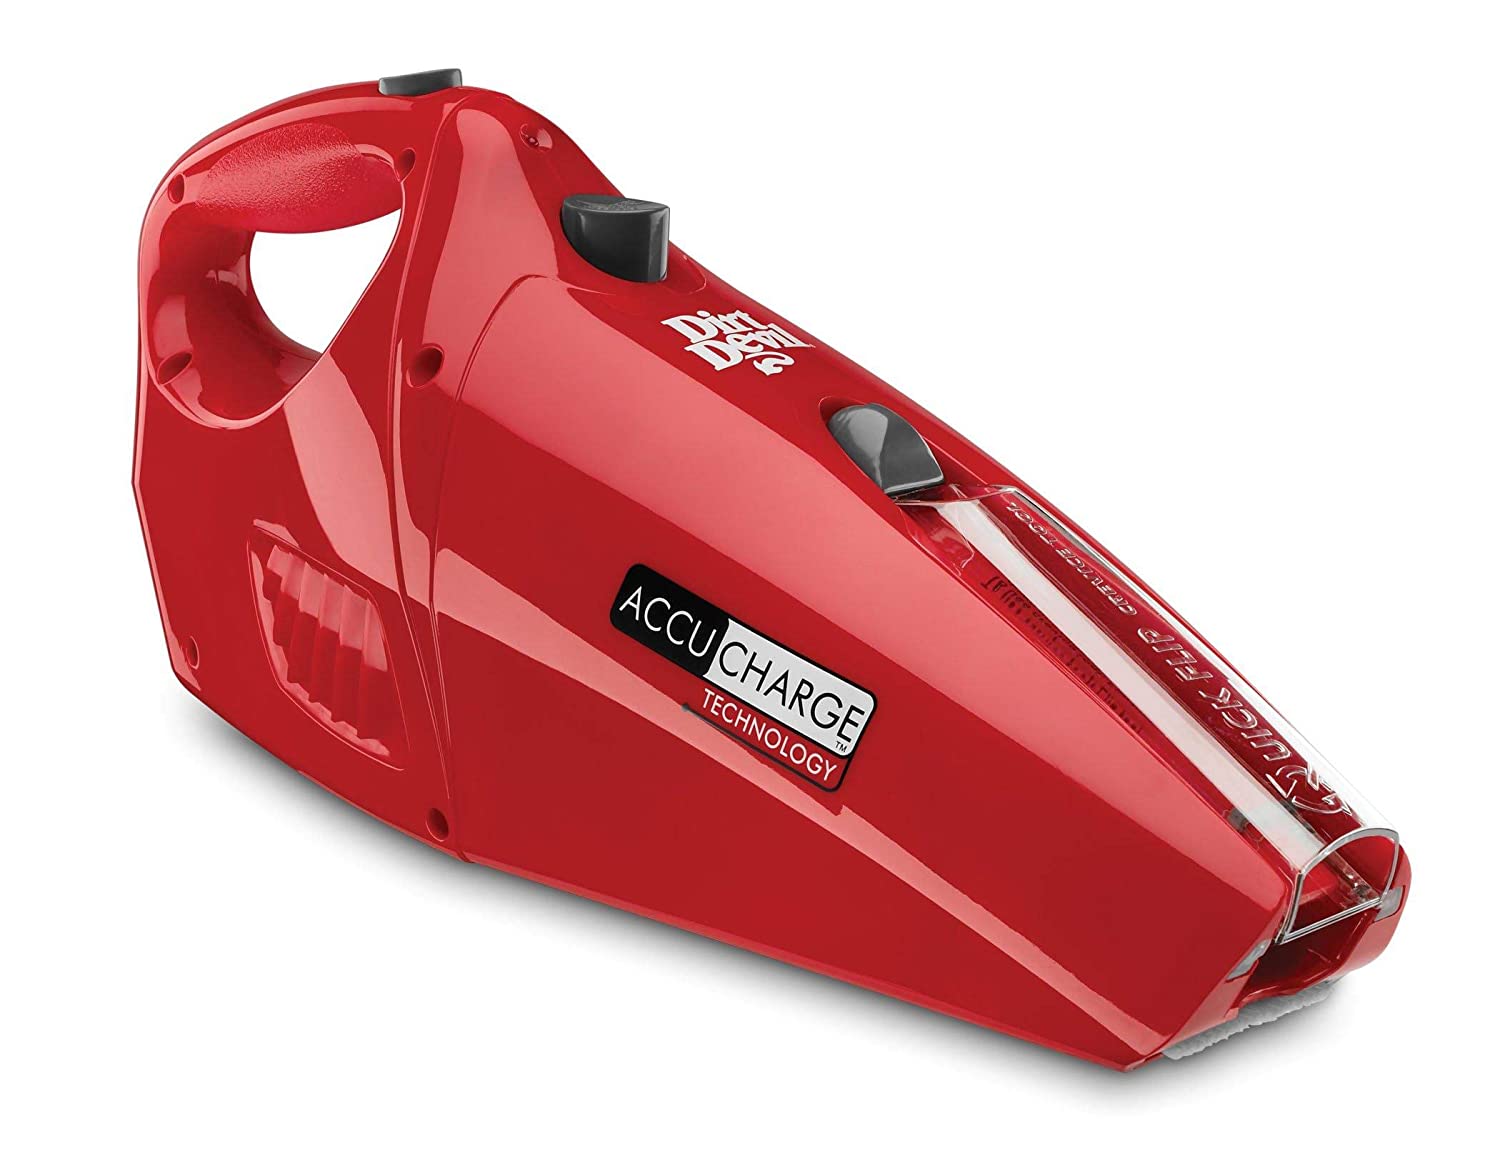 Dirt Devil Hand Vacuum Cleaner Accucharge 15.6 Volt Cordless Bagless Handheld Vacuum